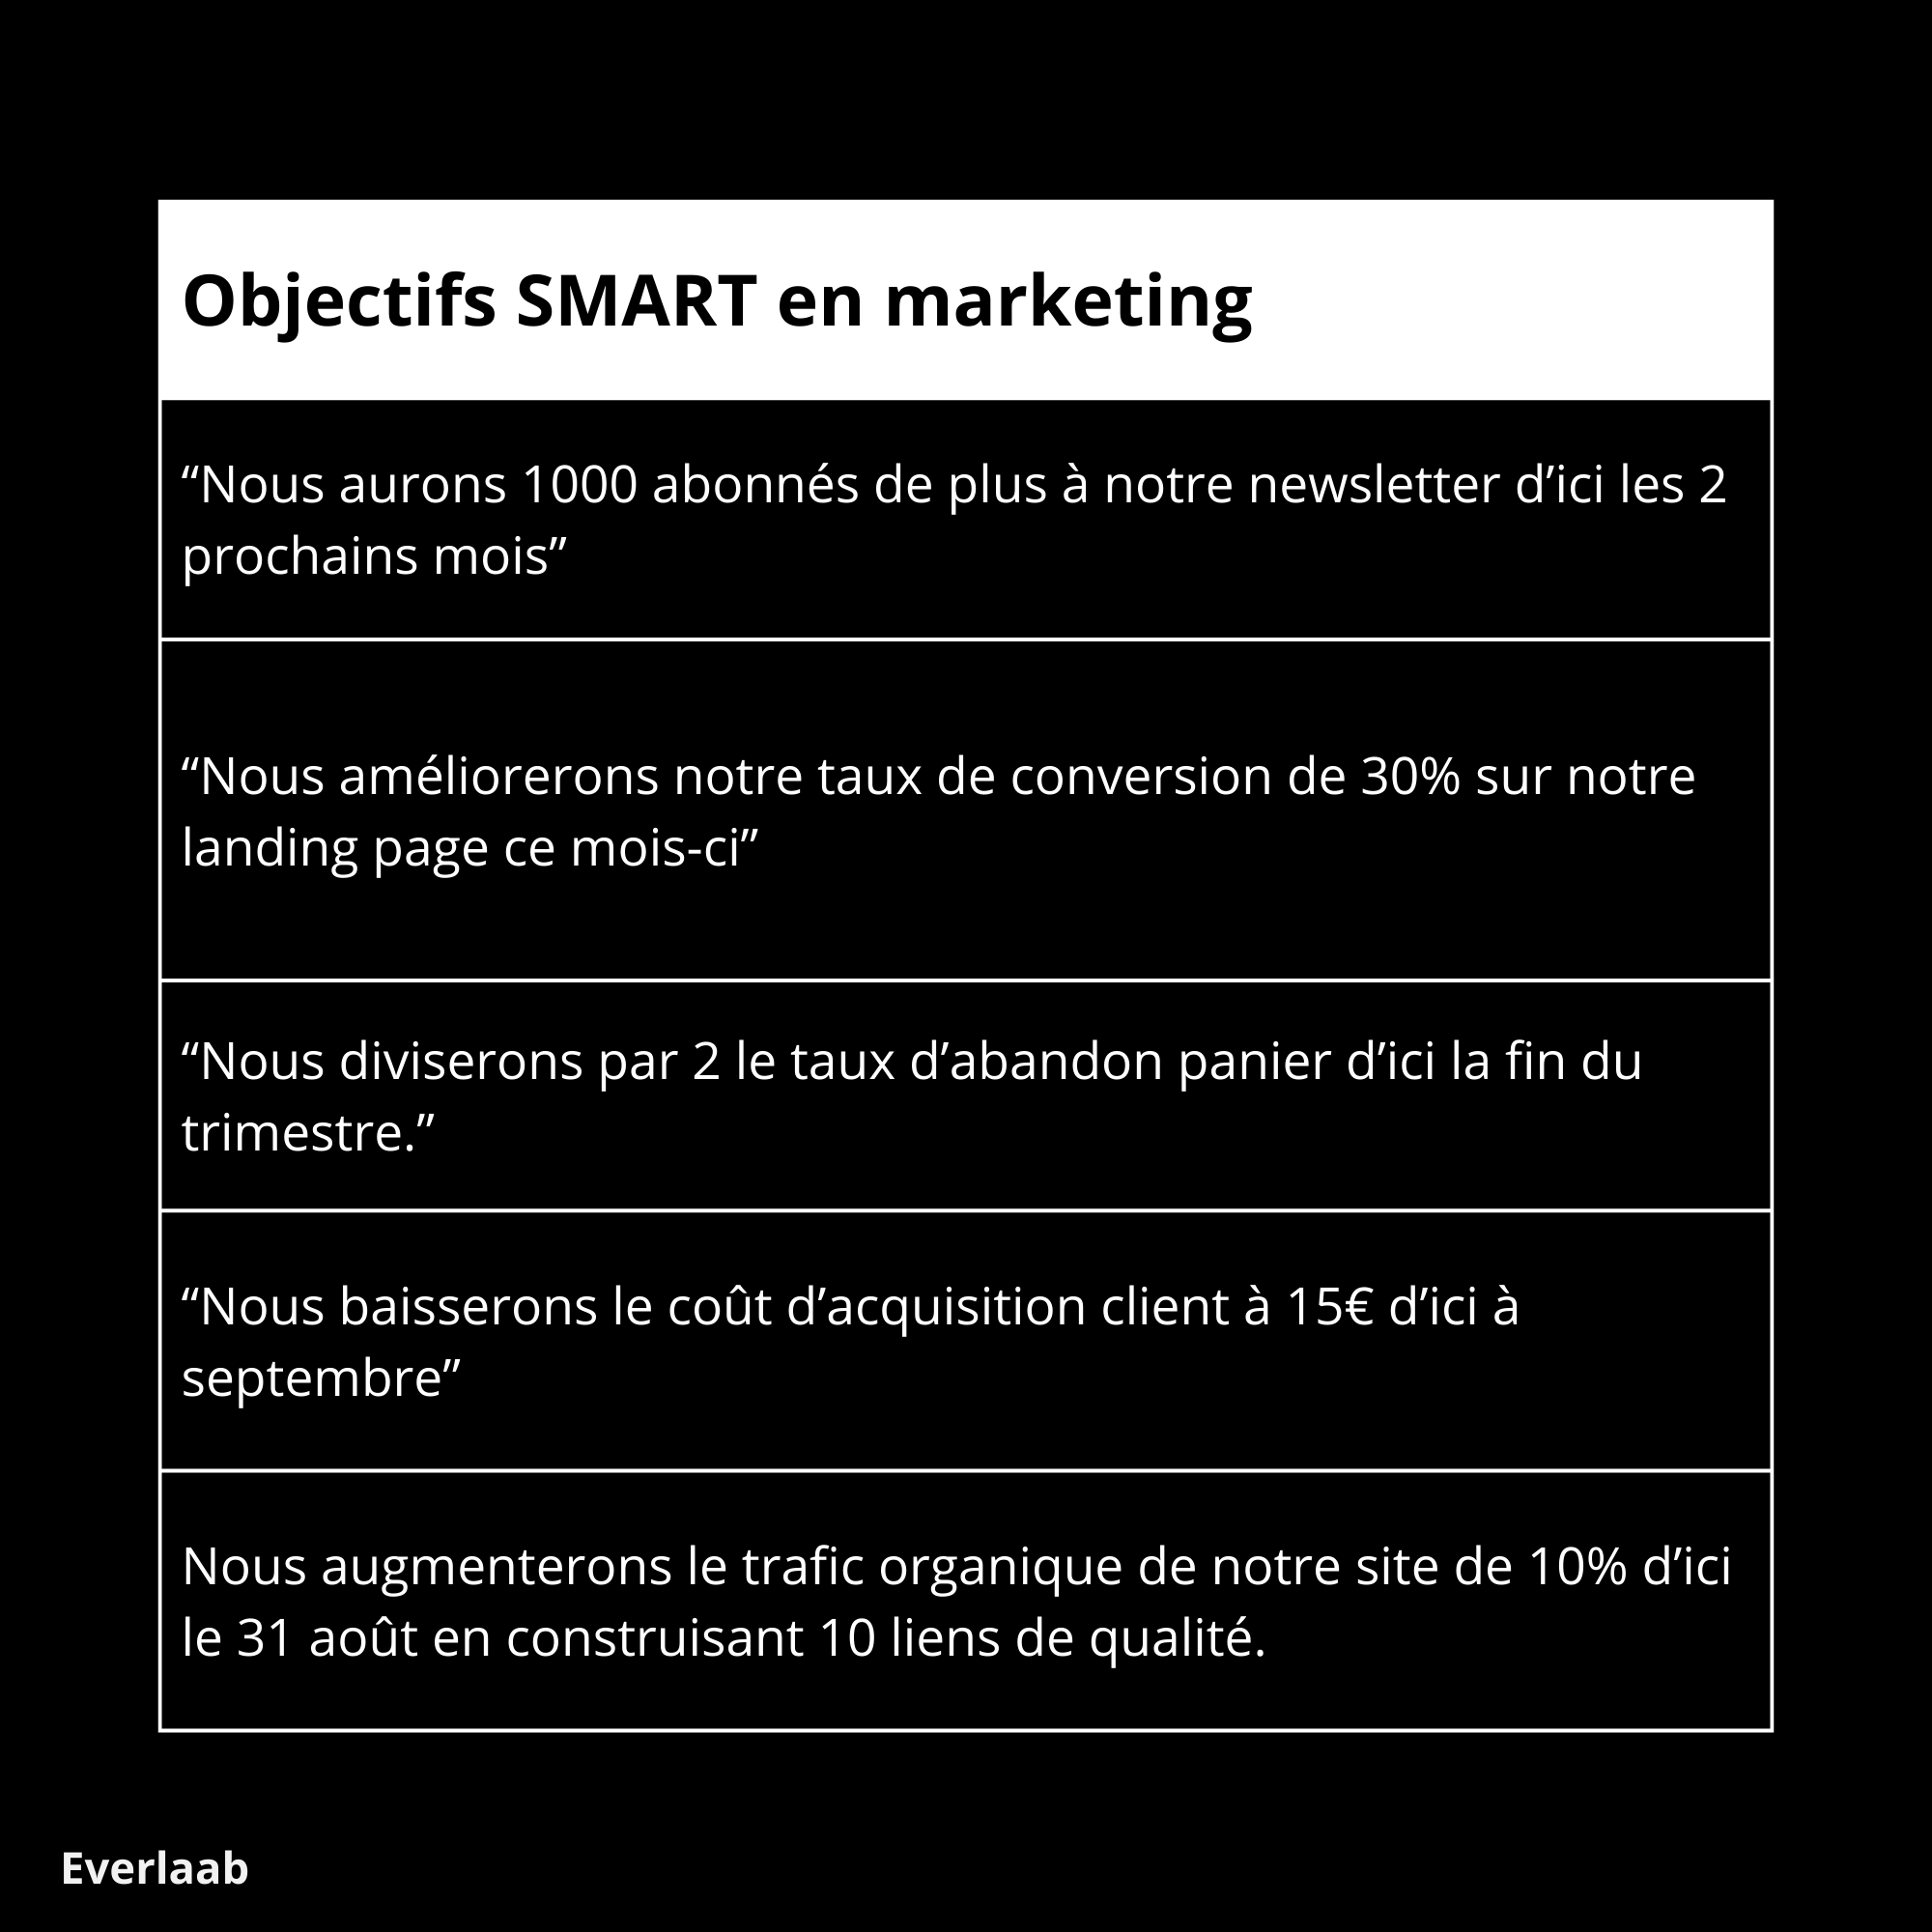 exemples d'objectifs smart en marketing.png